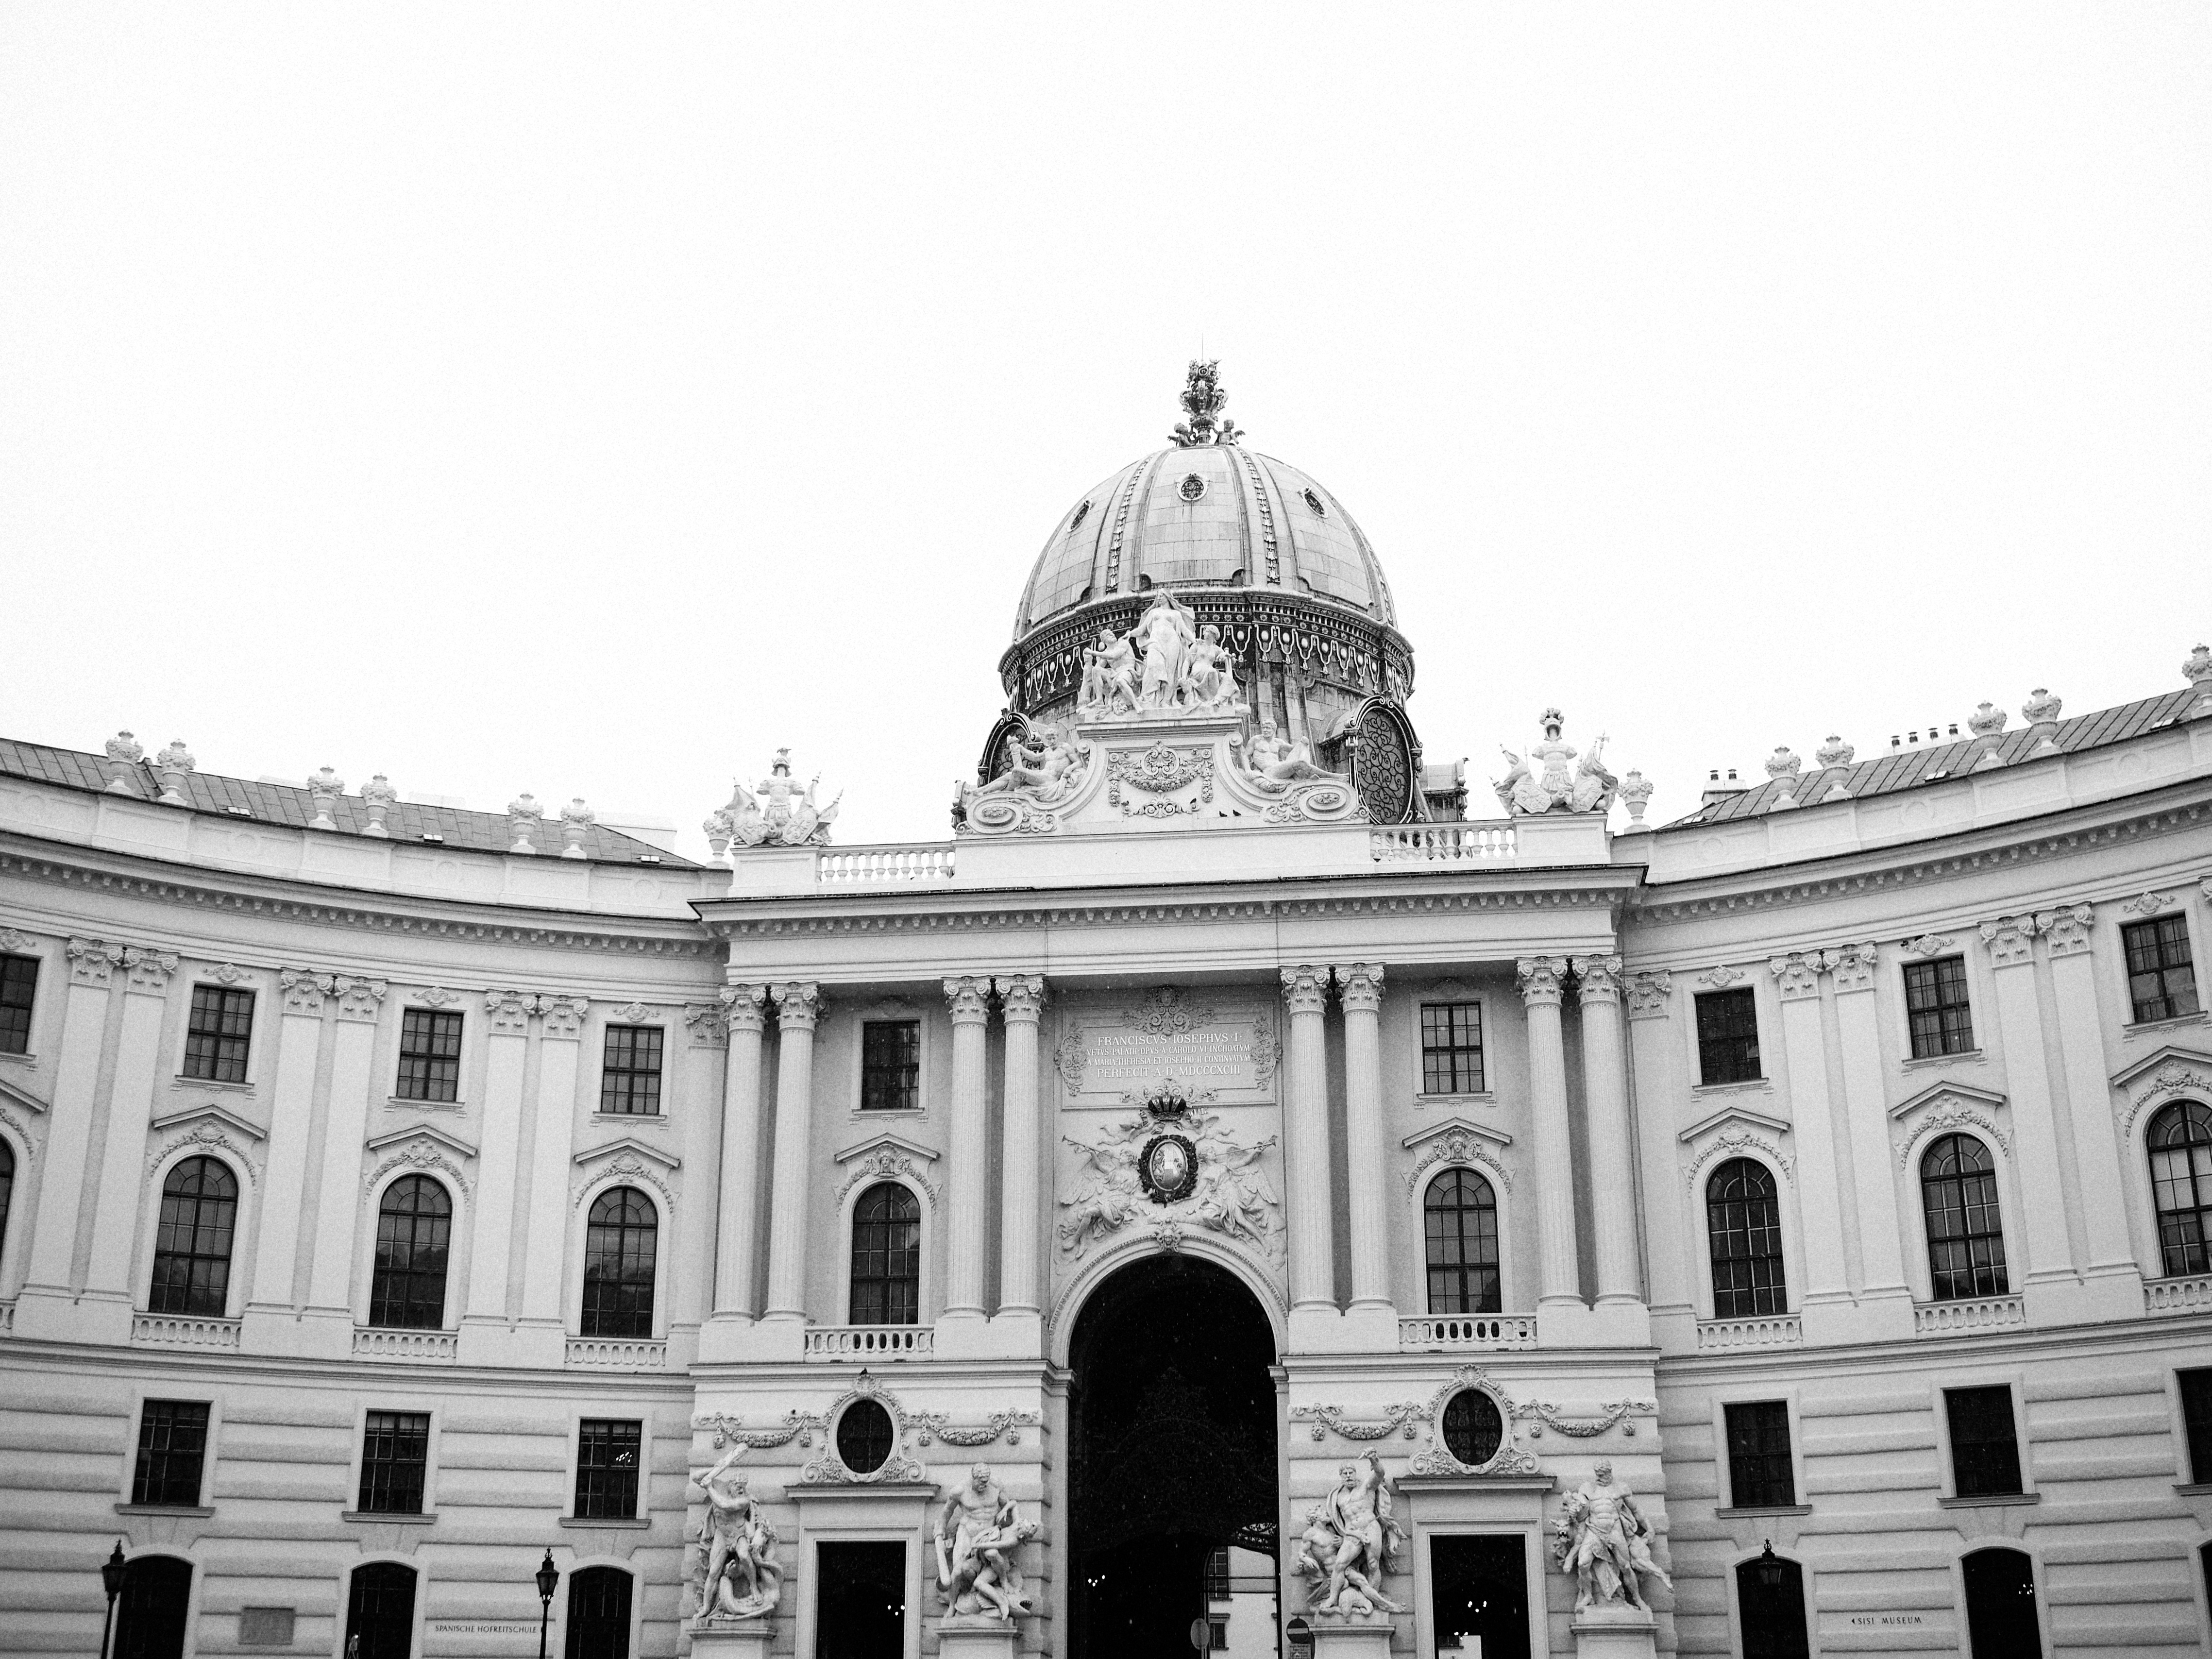 Hofburg Palace in Vienna Austria